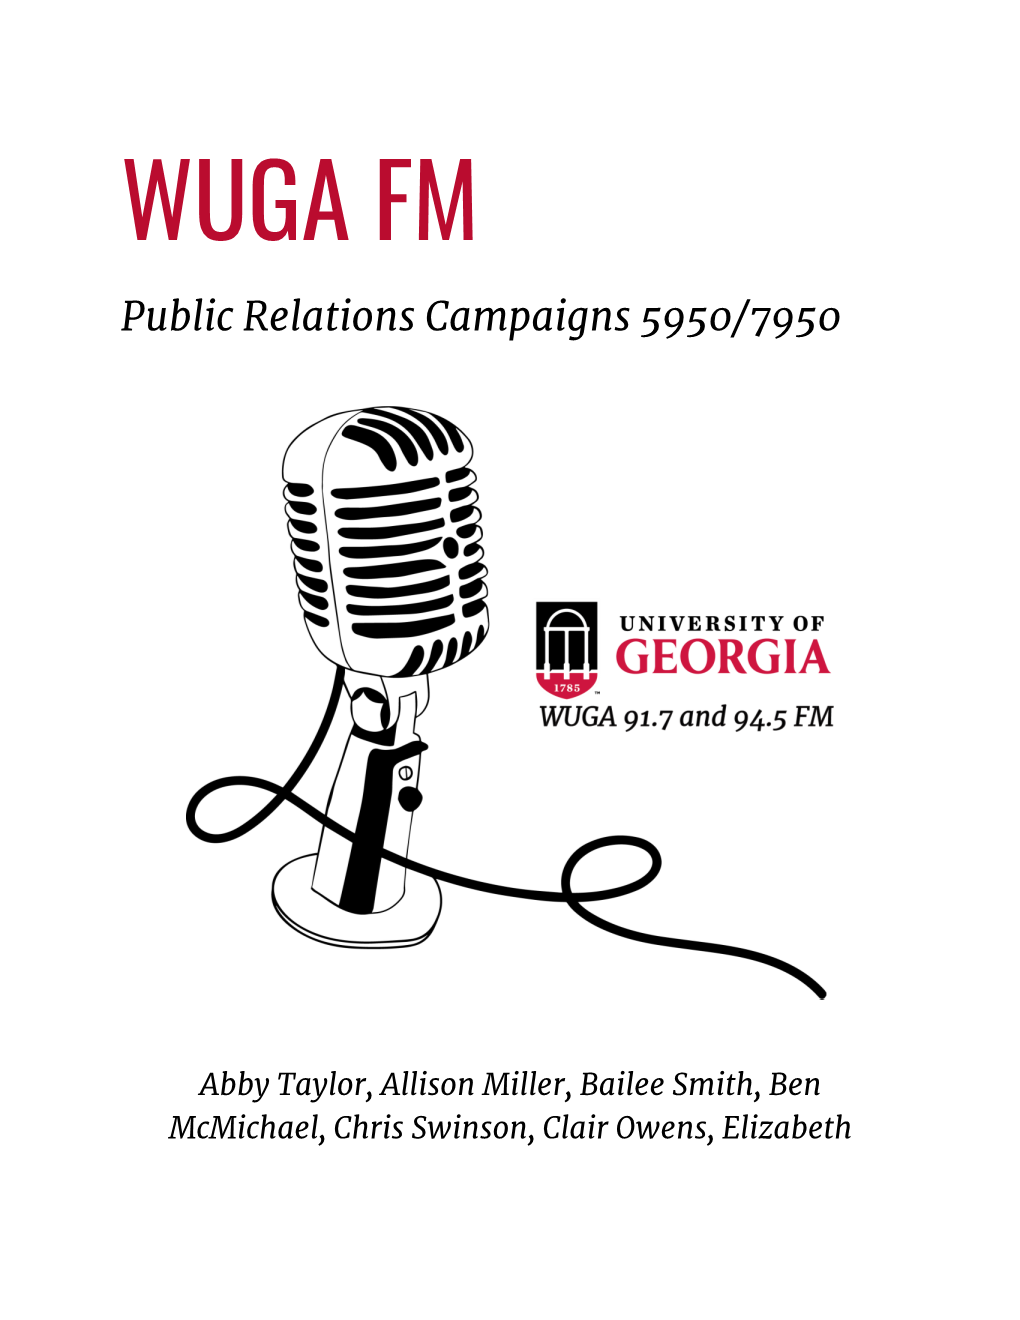 WUGA FM Public Relations Campaigns 5950/7950